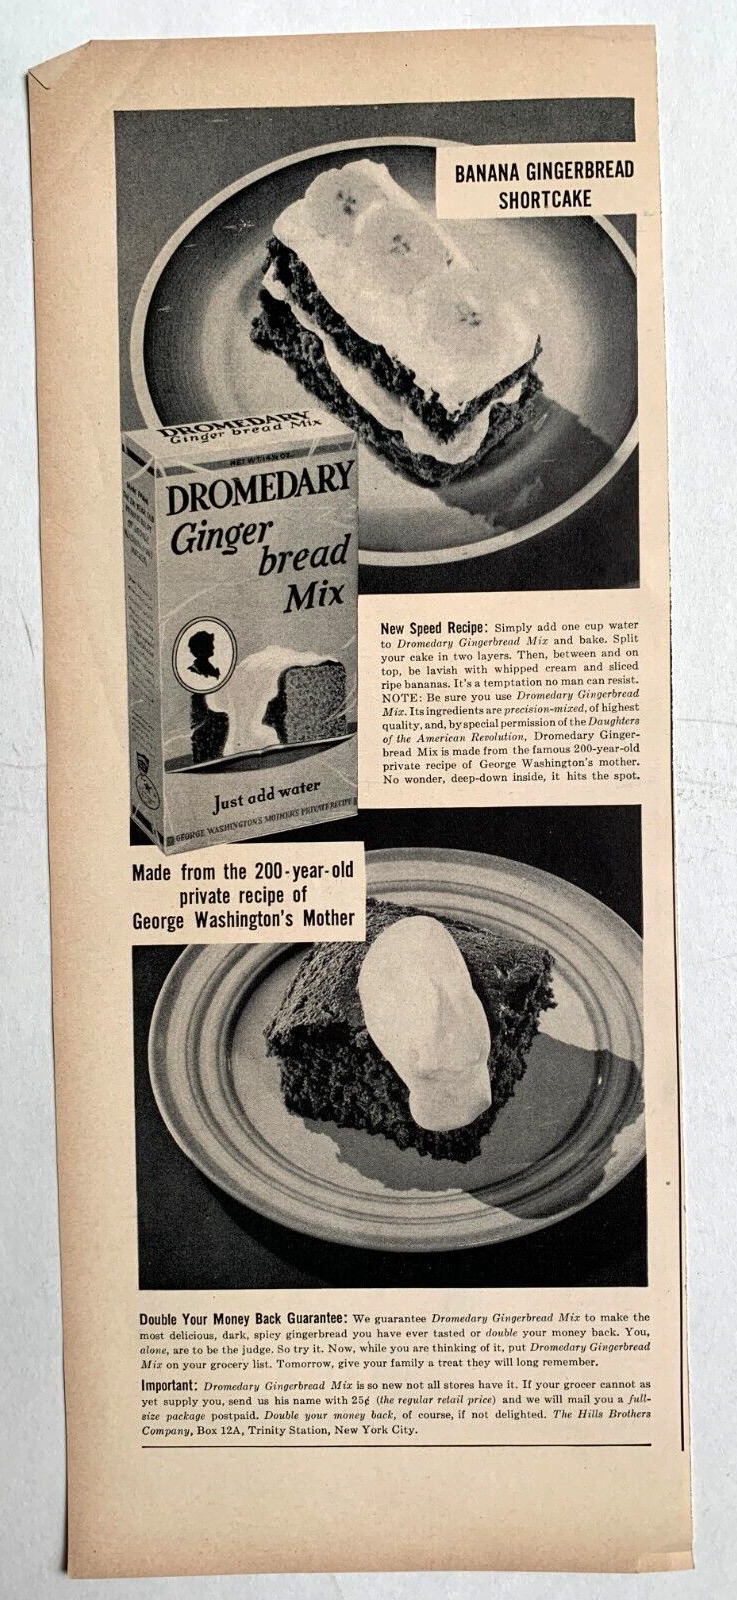 1939 Dromedary Dates Print Ad 14\